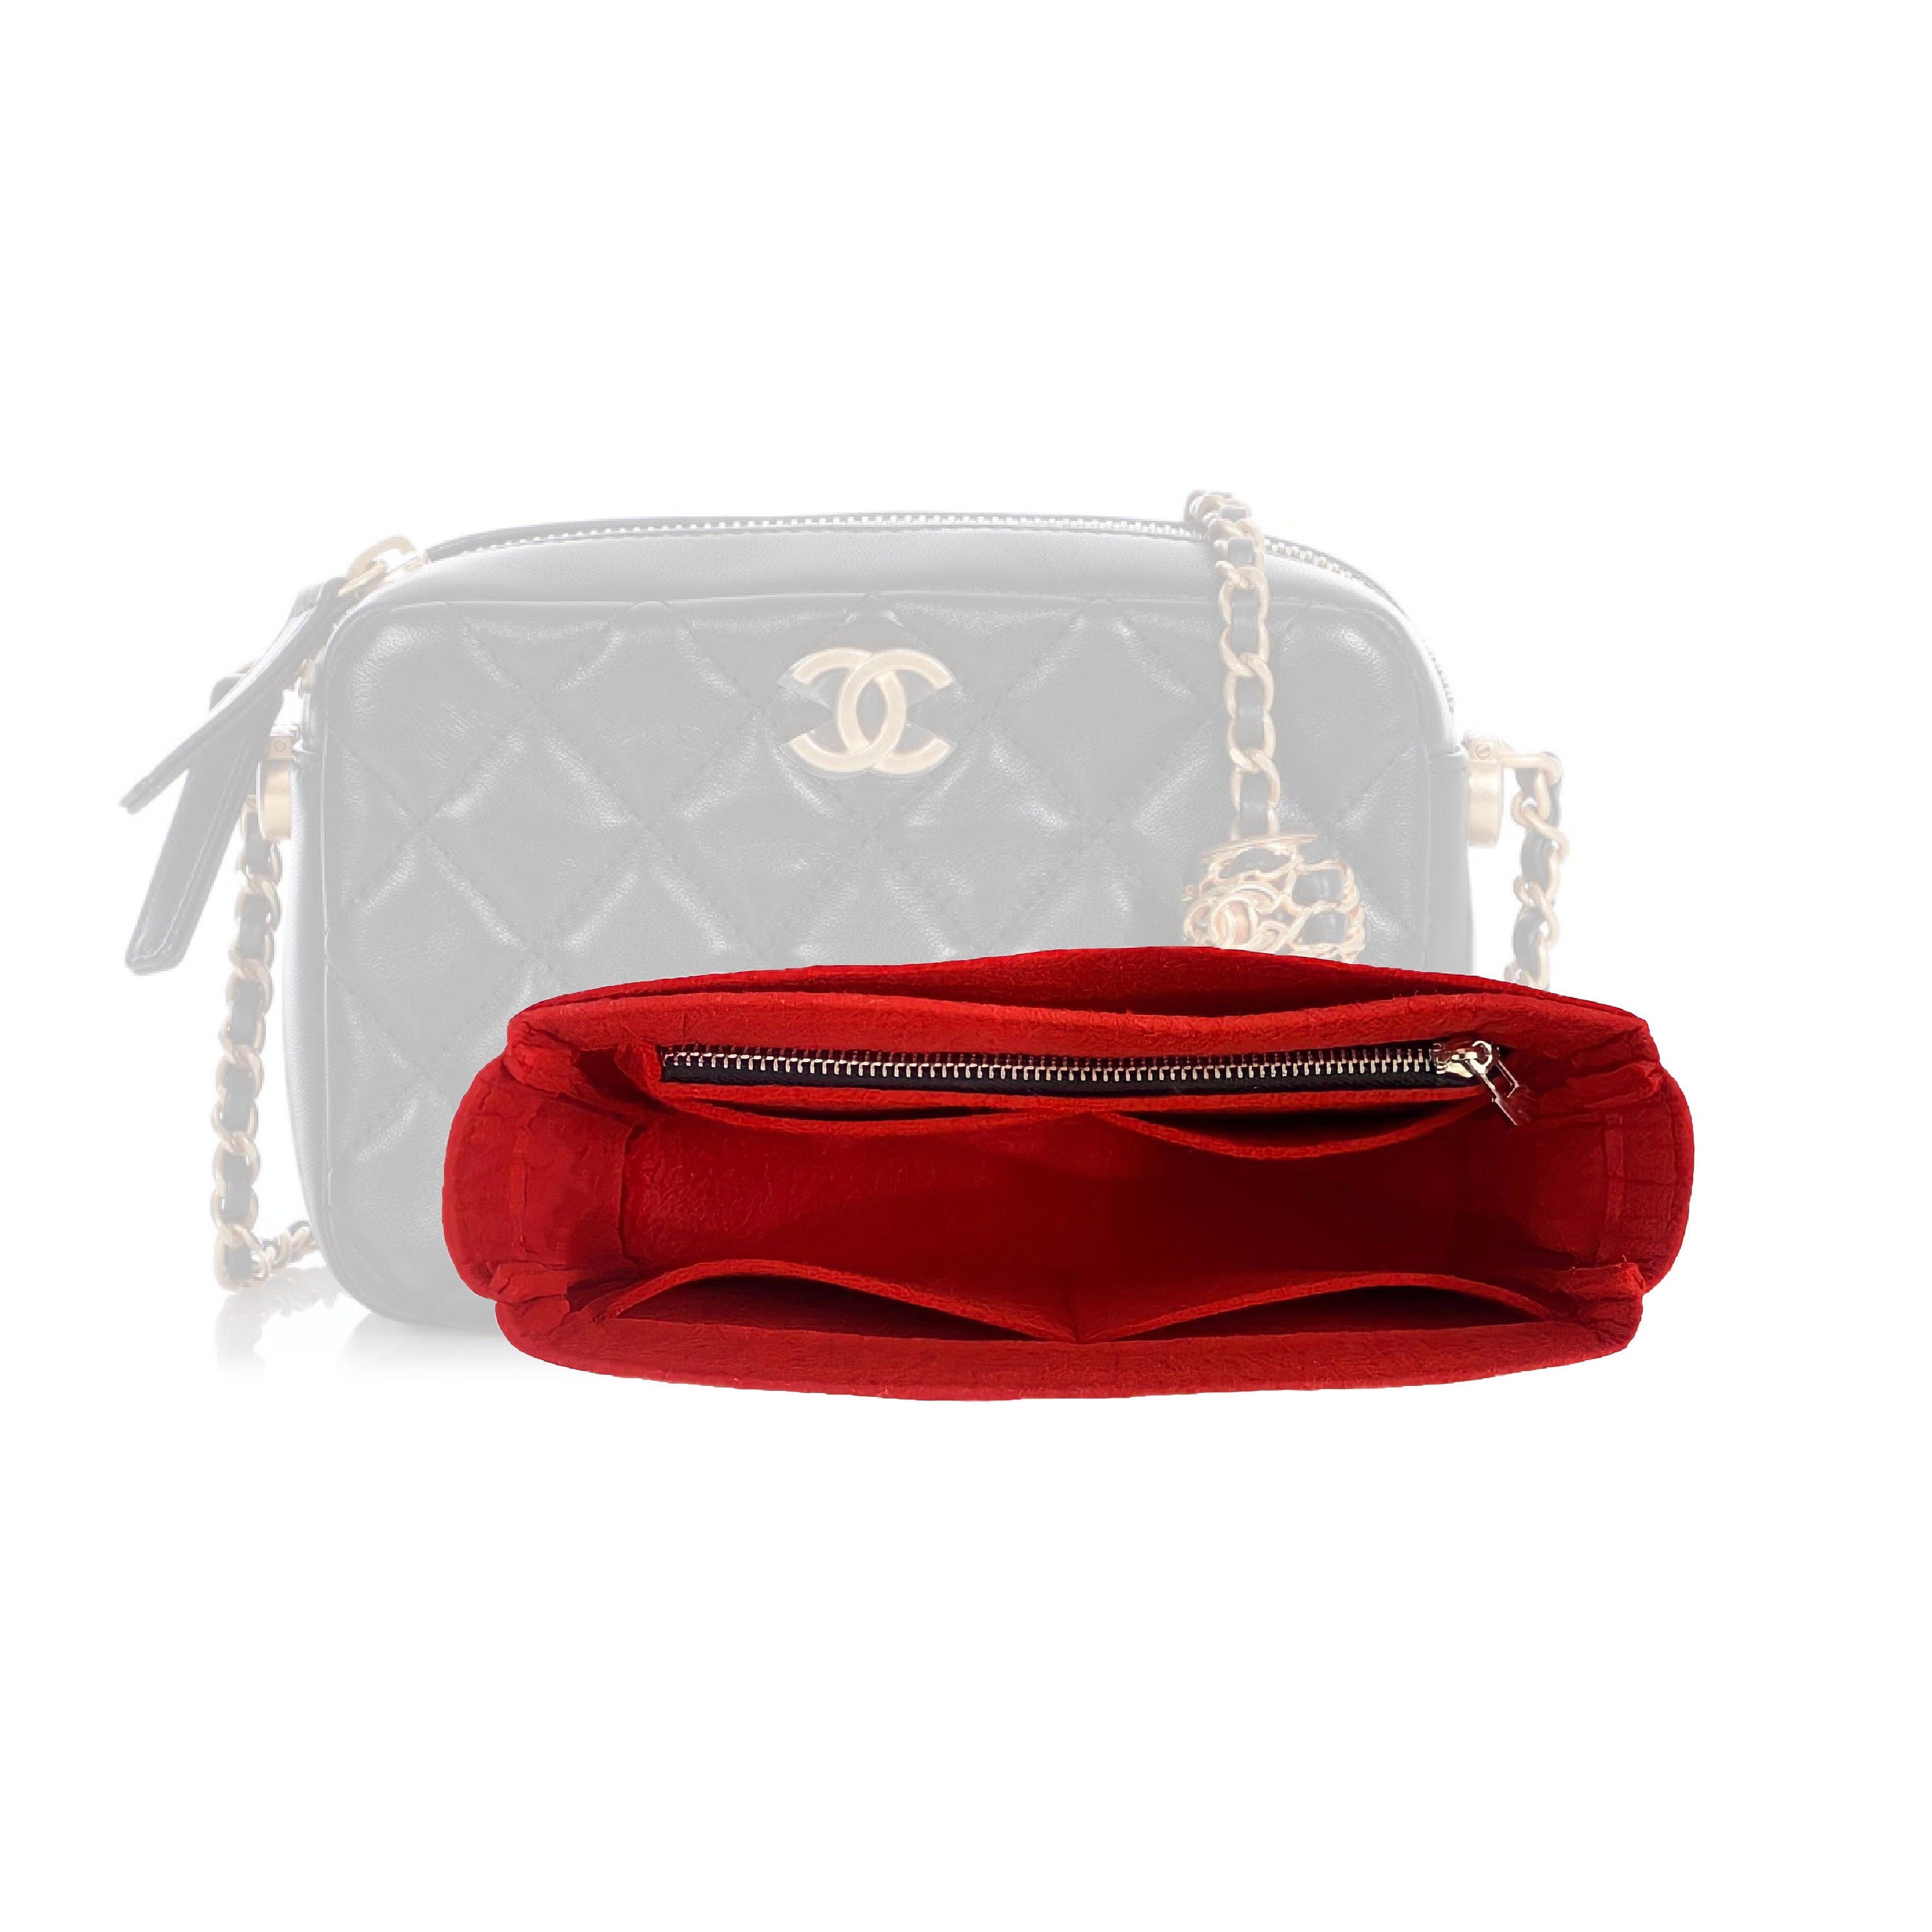  Bag Organizer for Chanel 2.55 Reissue (Size 224/20 cm/Mini)  Insert - Premium Felt (Handmade/20 Colors) : Handmade Products